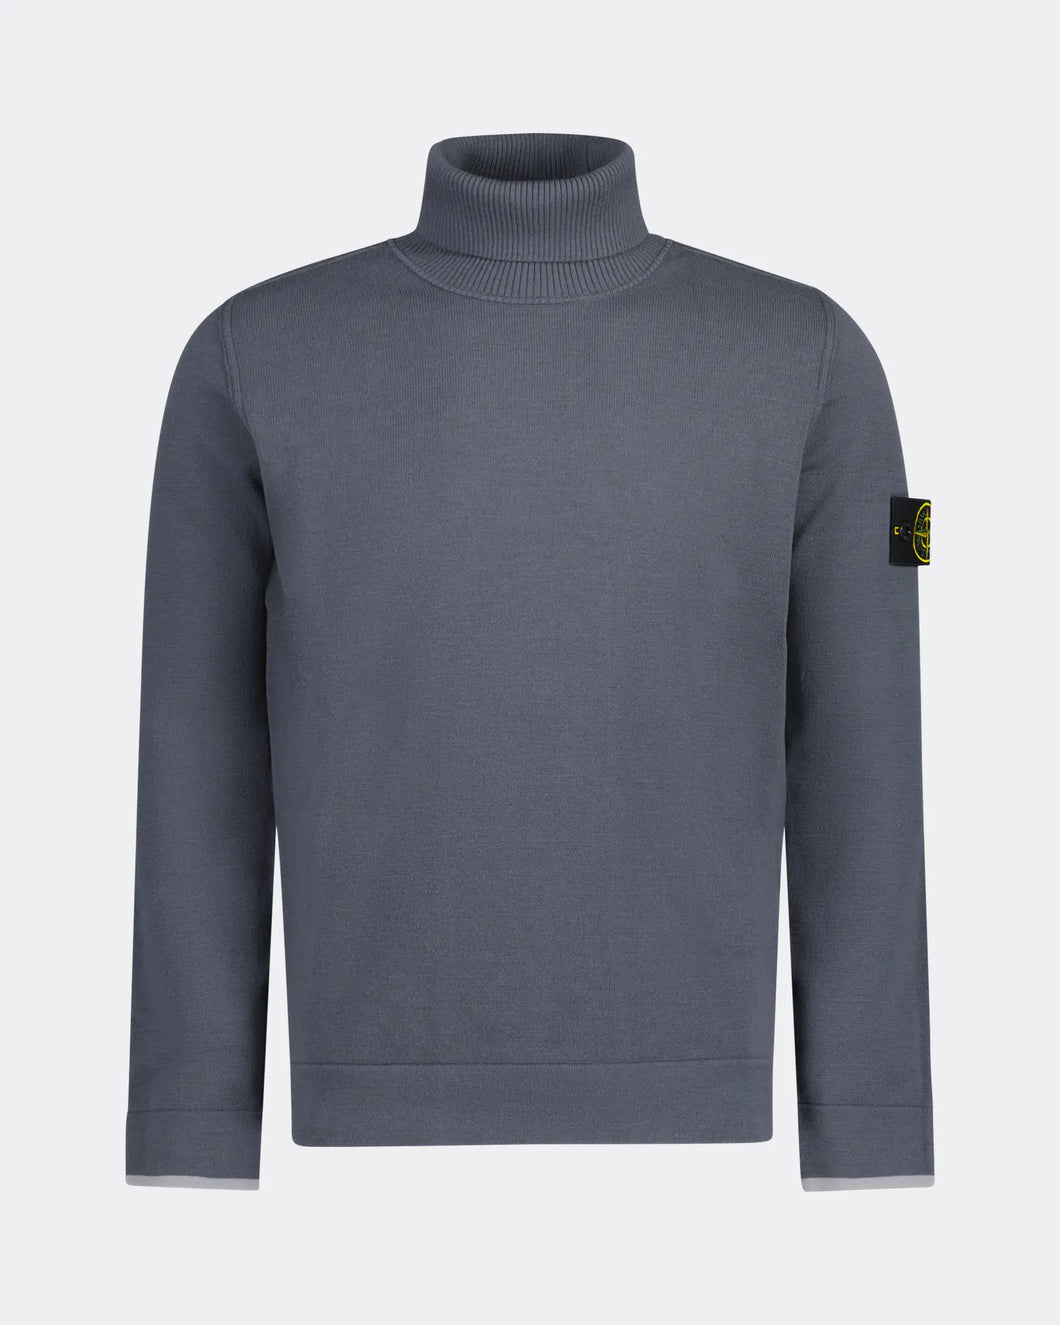 Stone Island Virgin Wool Roll-Neck Sweatshirt in Dark Grey